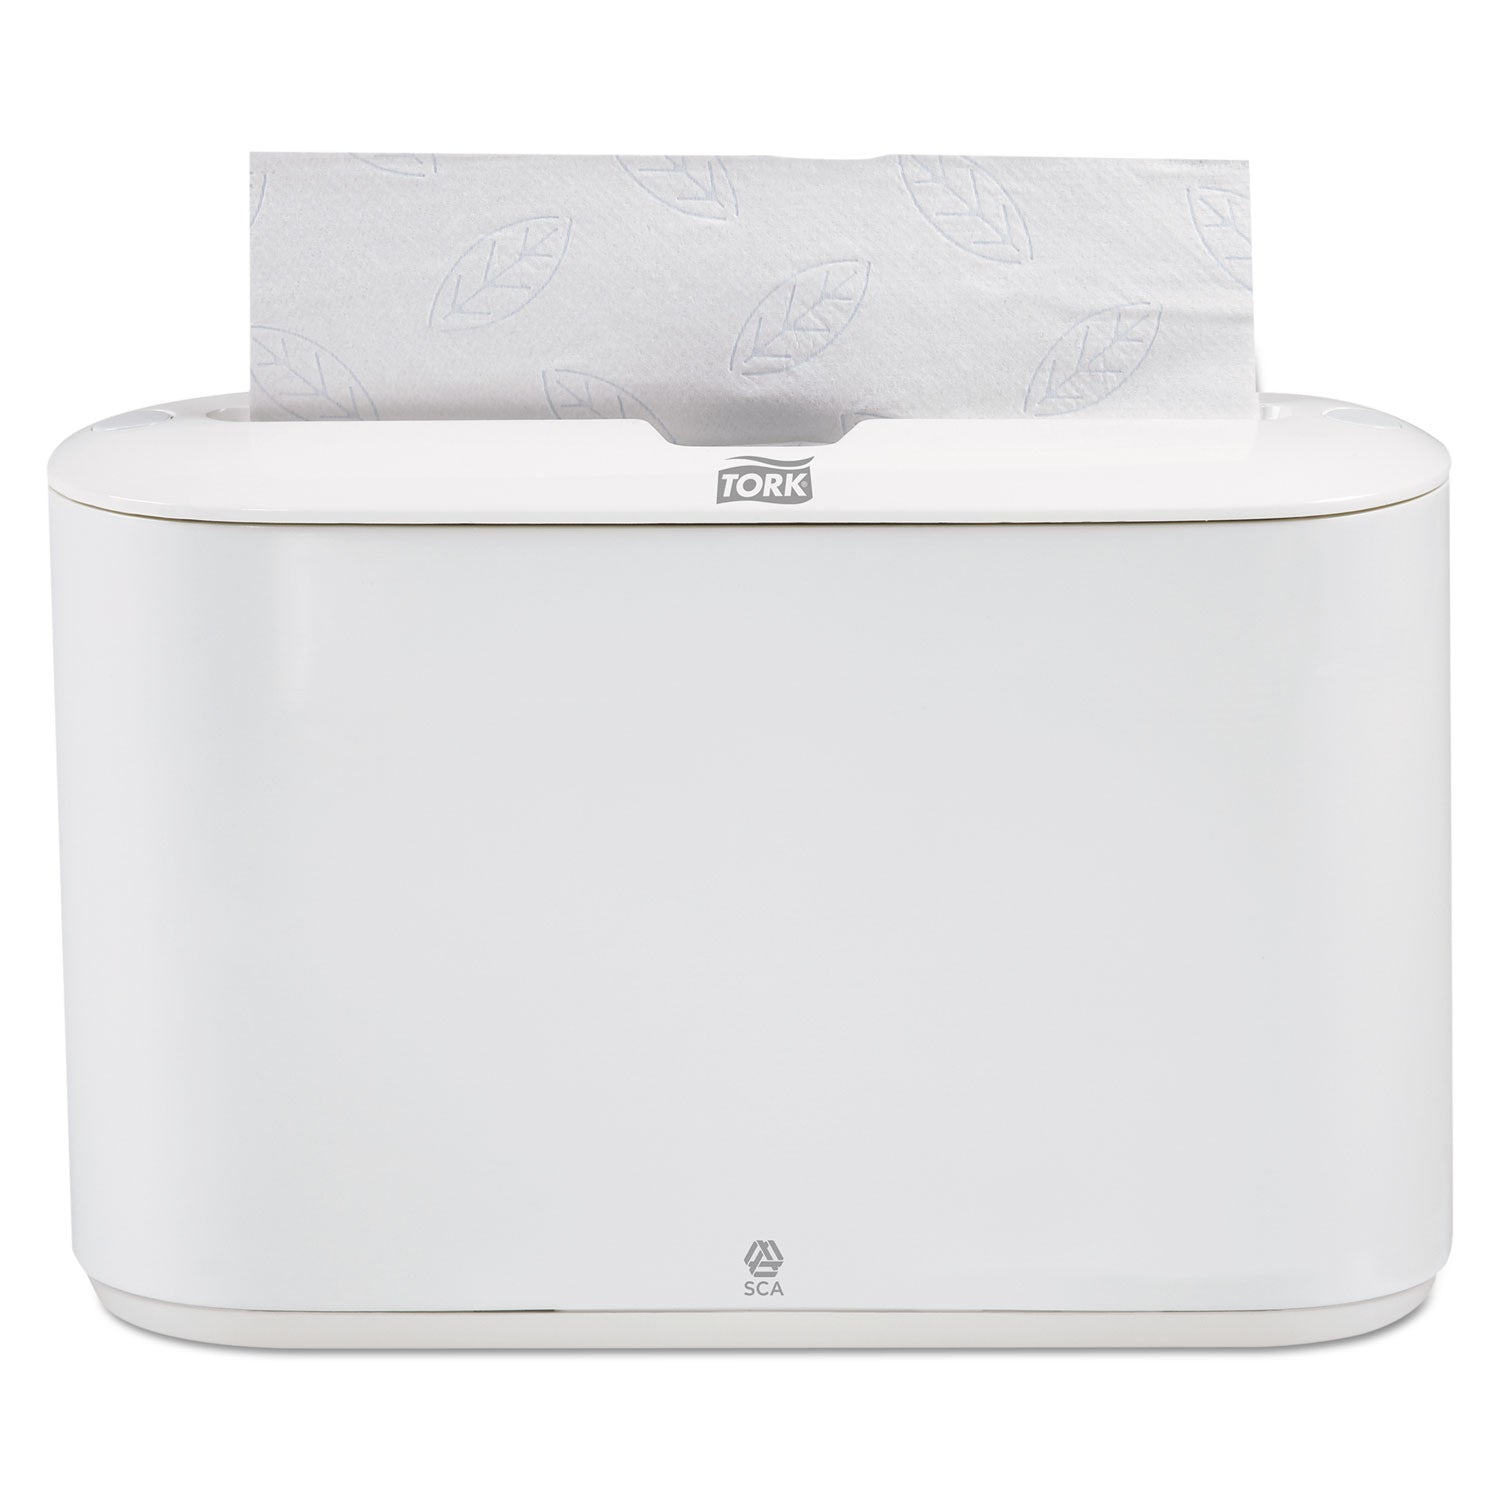 Tork Countertop Towel Dispenser, White, Plastic, 14.76